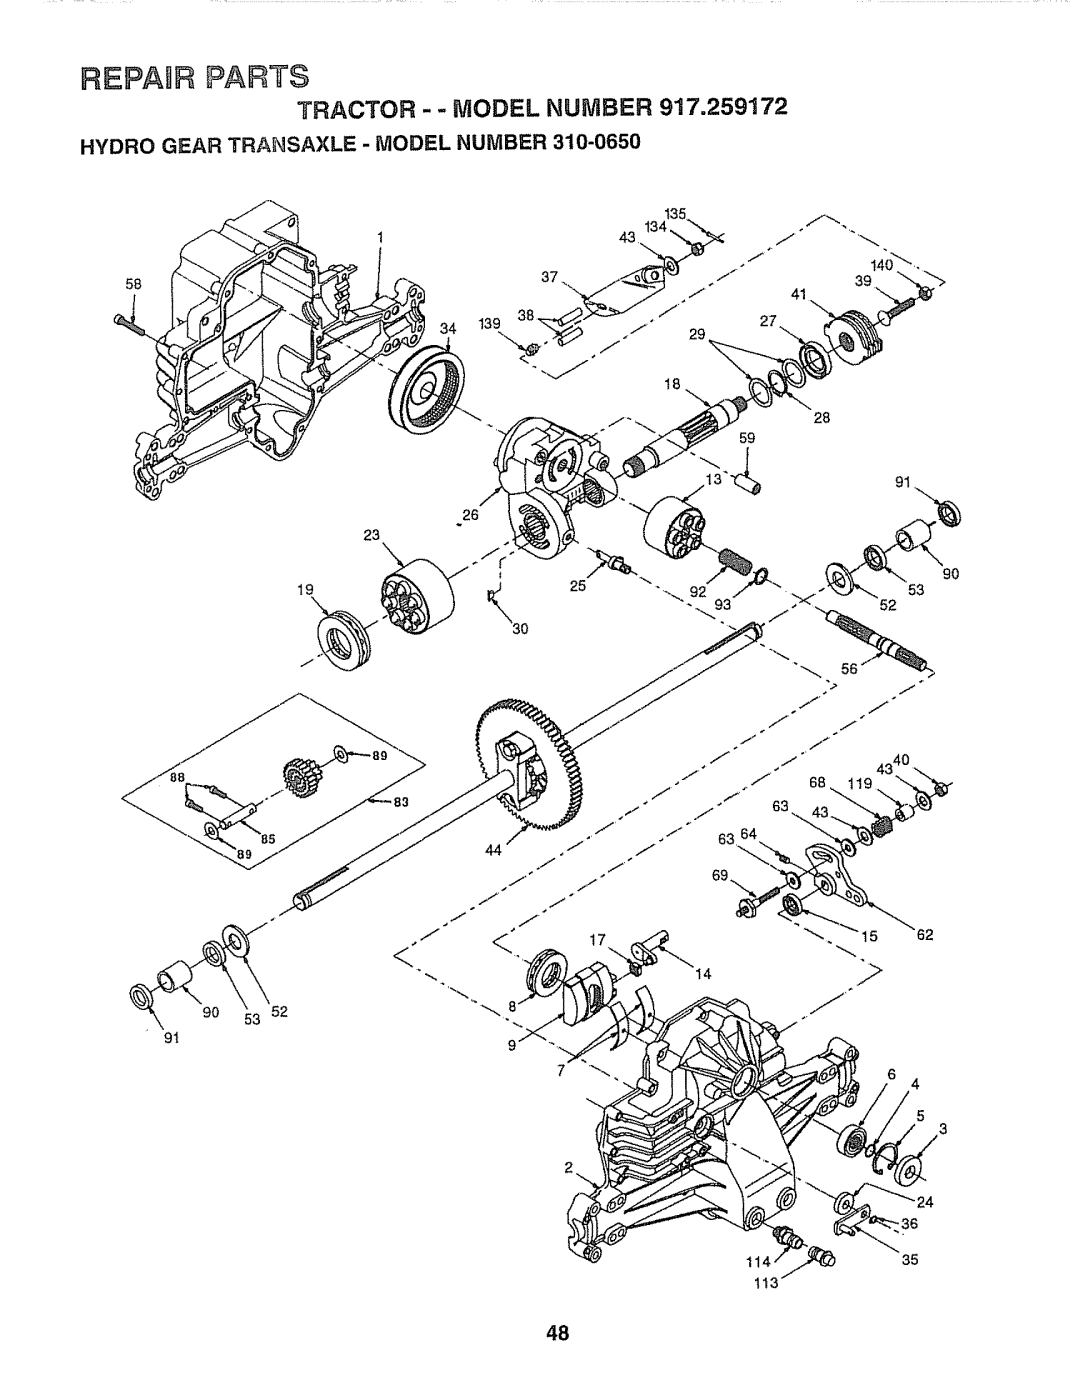 Craftsman 917.259172 manual Hydro Gear Transaxle - Model Number, Repair Parts, Tractor -- Model Number, 1135 11 